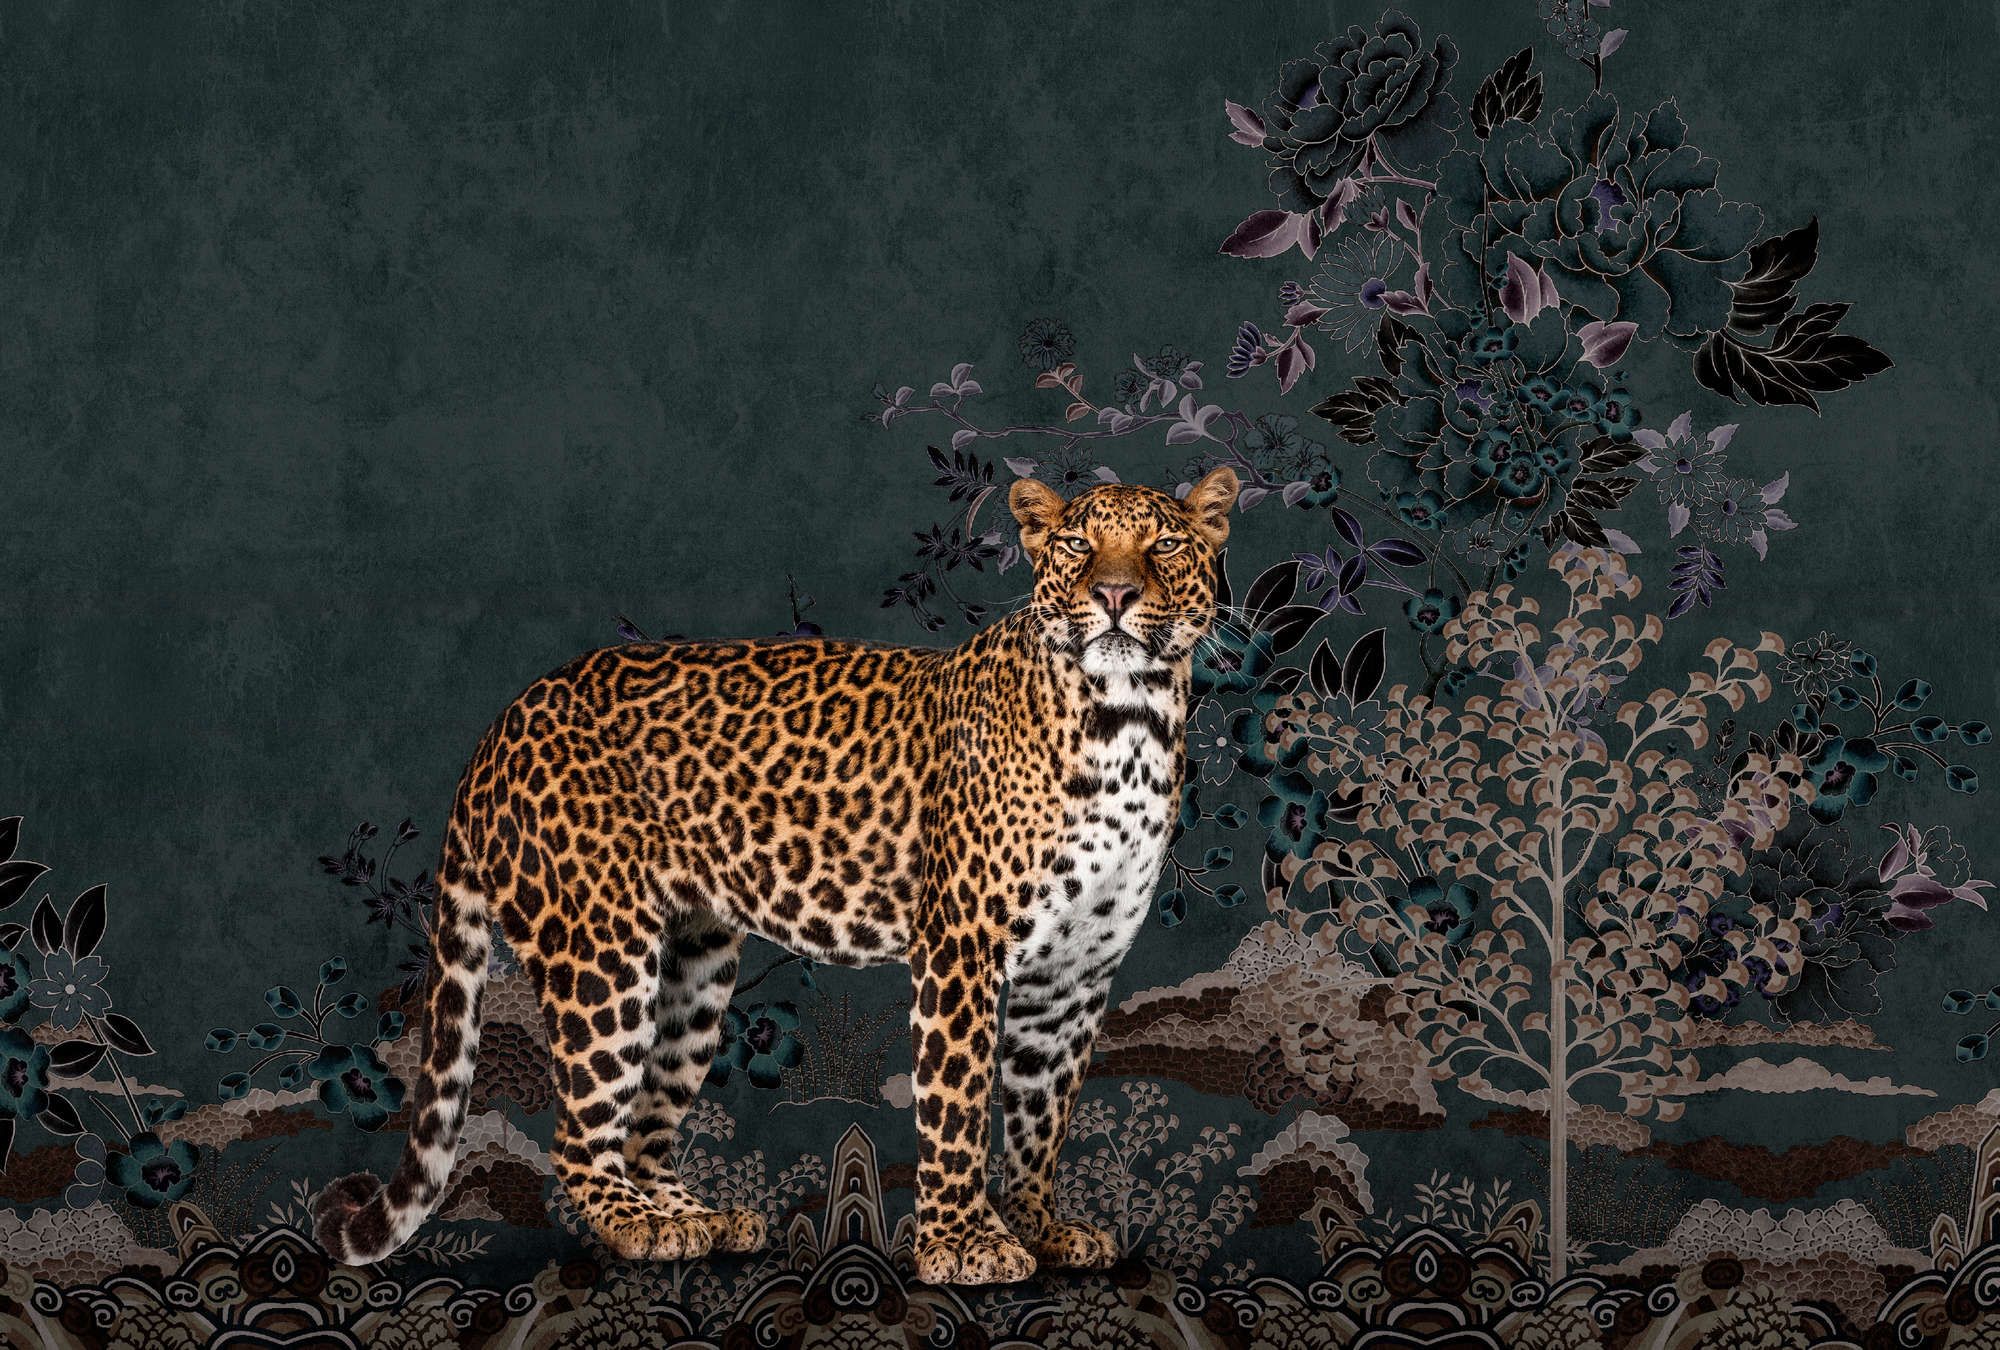             Fotomural »rani« - Motivo abstracto selva con leopardo - Tela no tejida lisa y mate
        